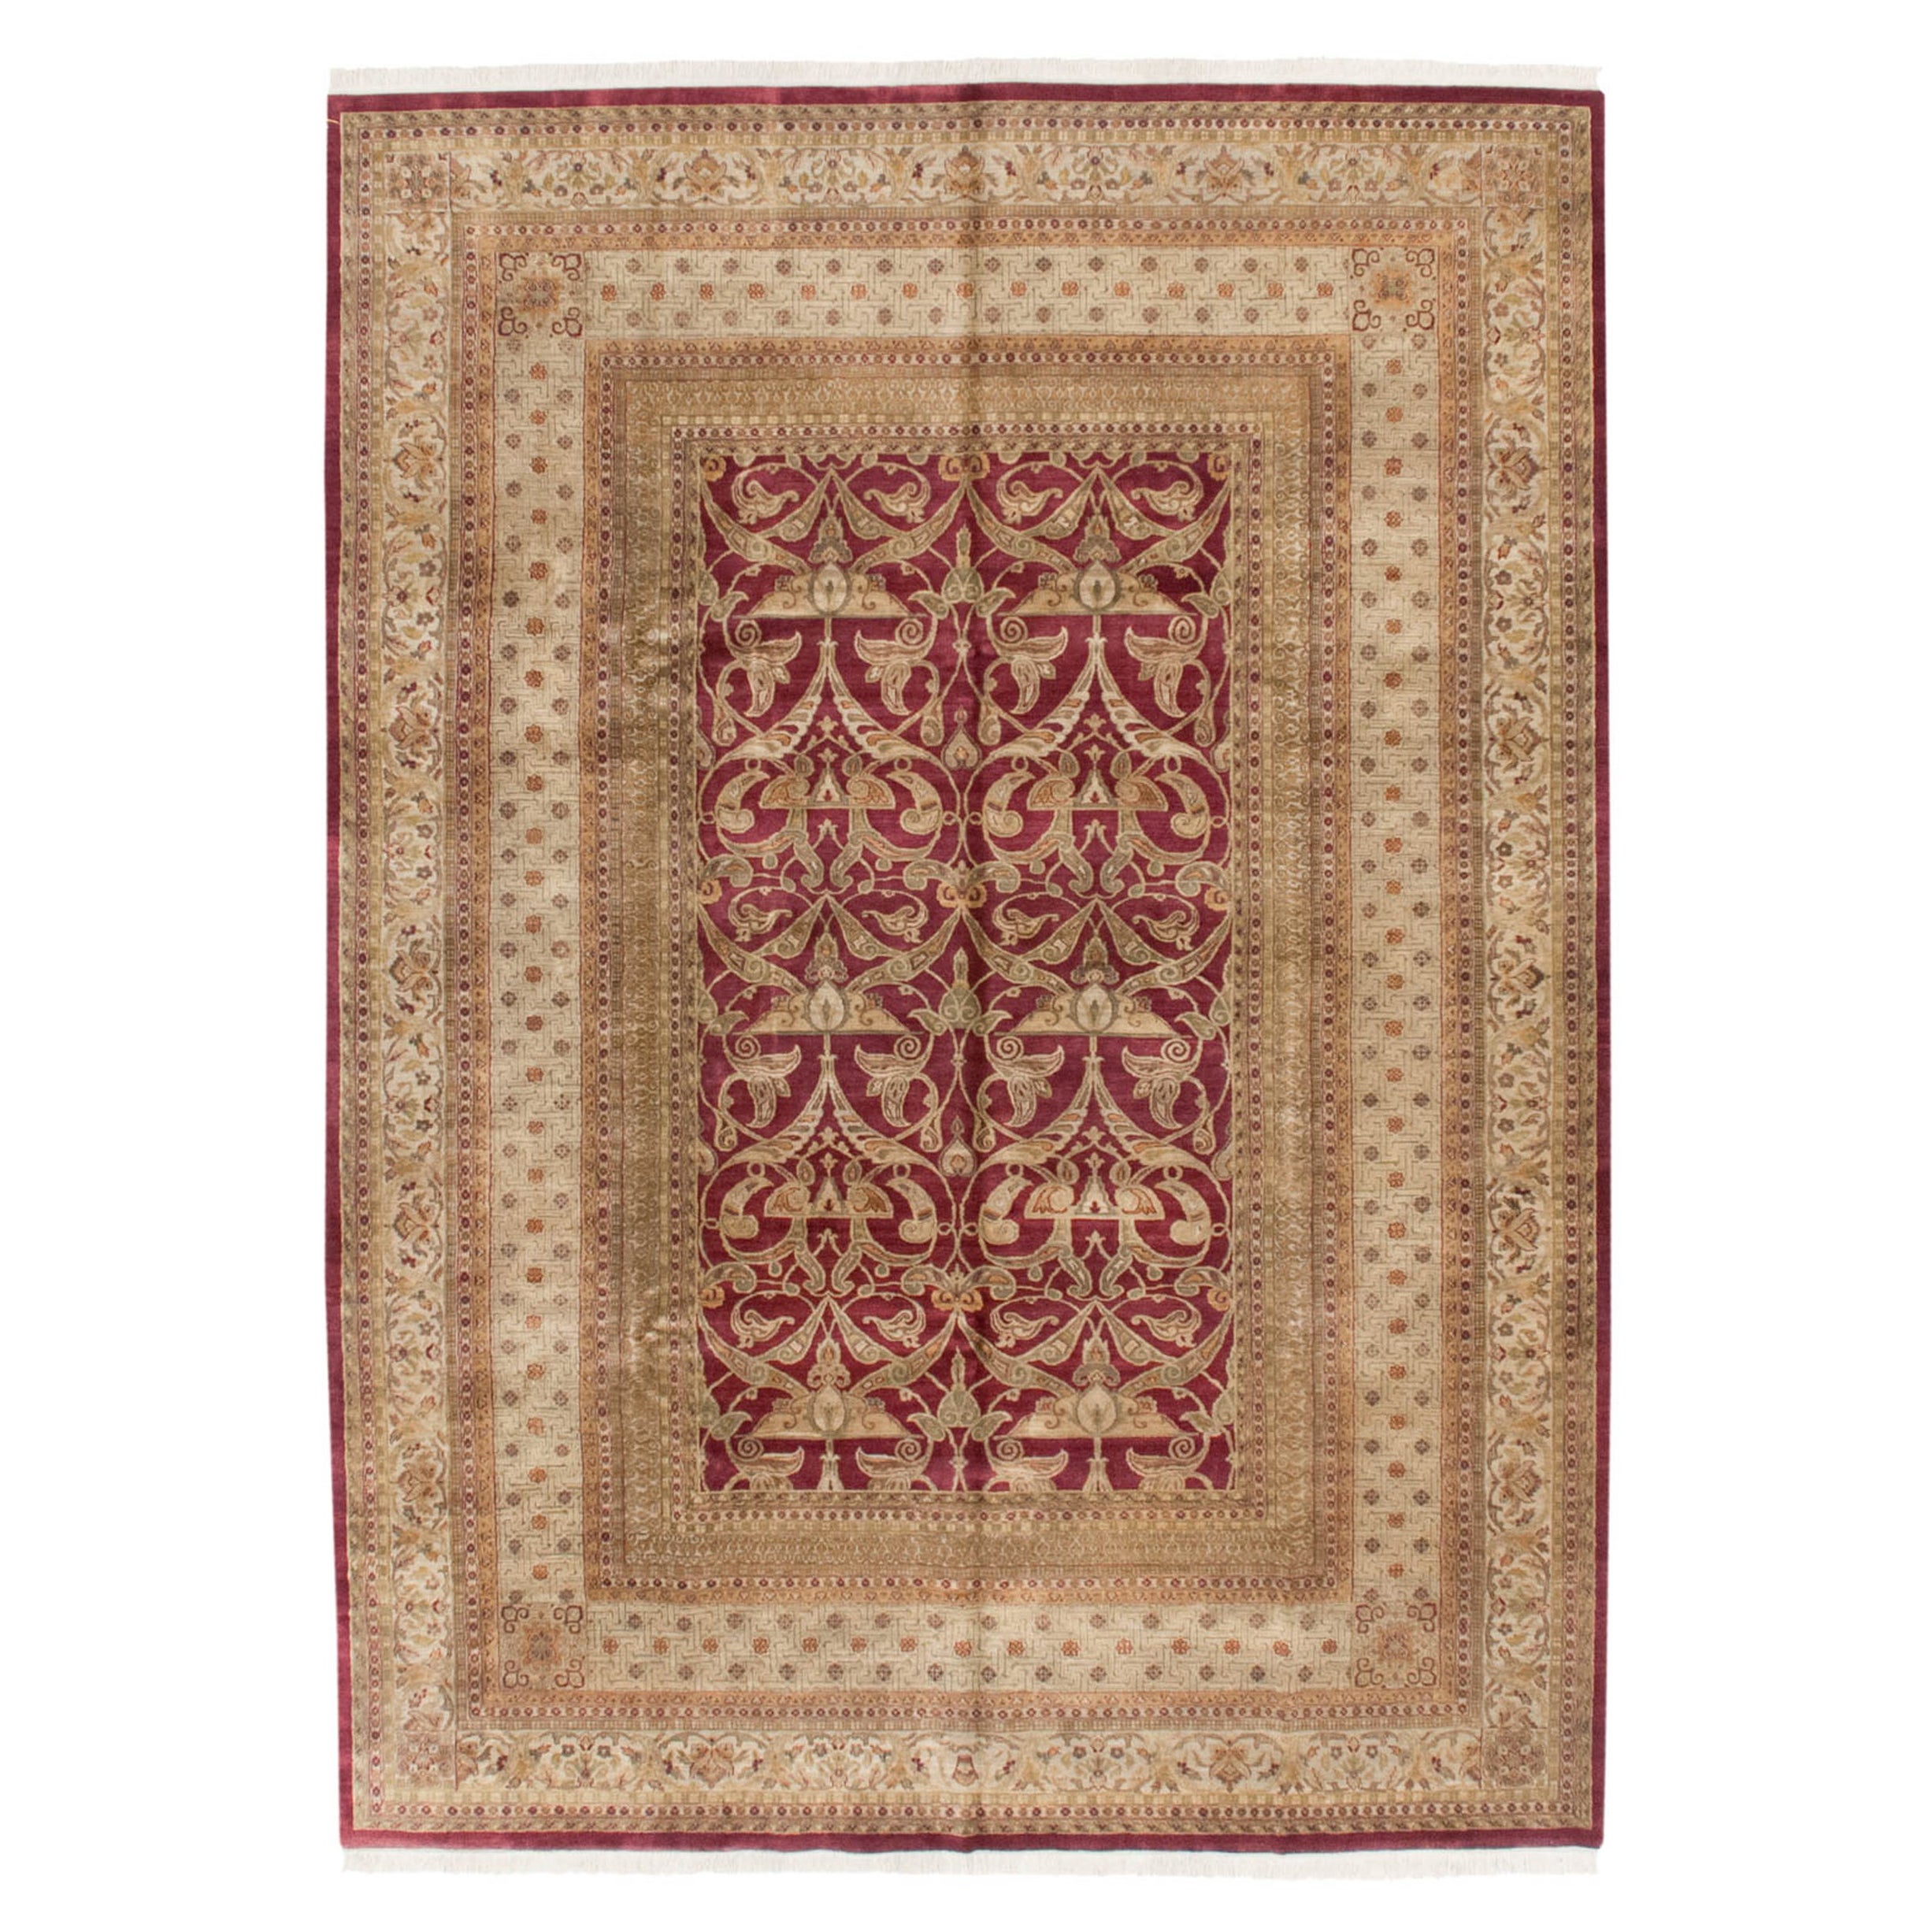 Fine Indian Art Nouveau Design Carpet